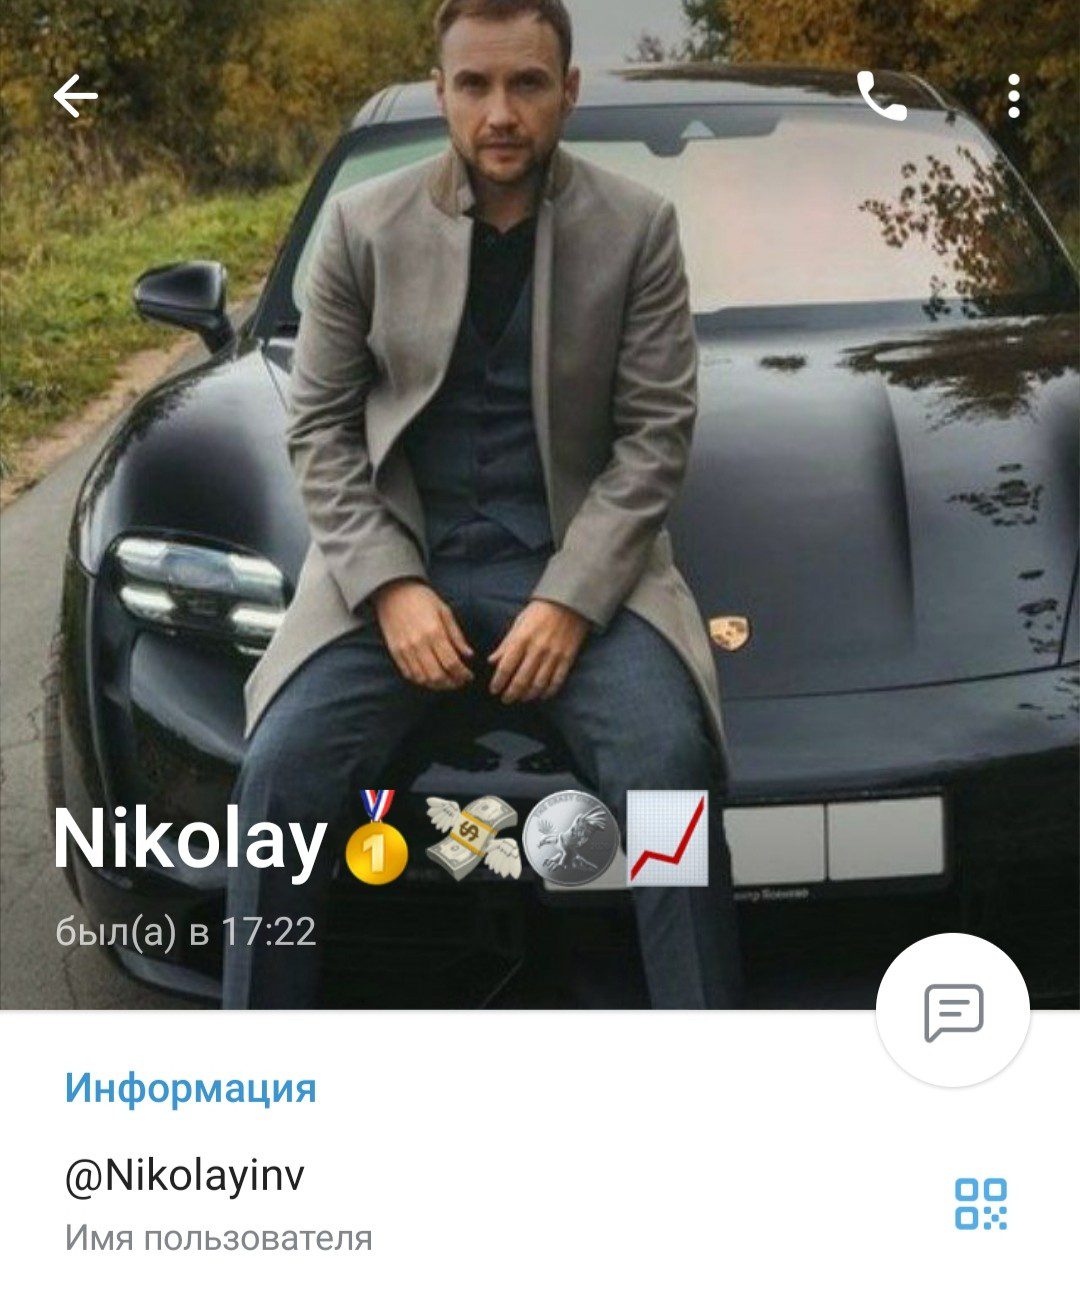 Nikolayinv отзывы